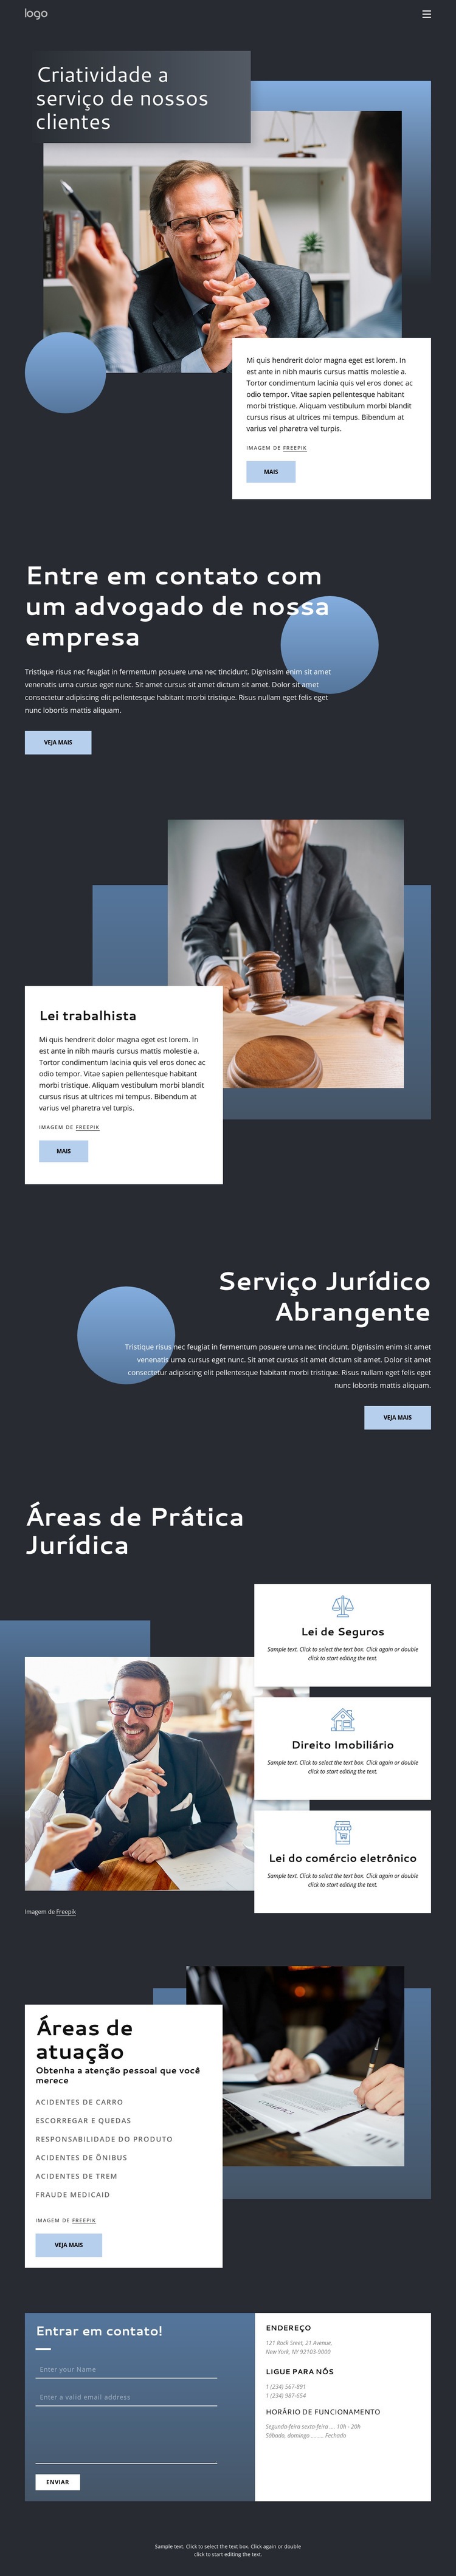 Consultoria jurídica experiente Design do site